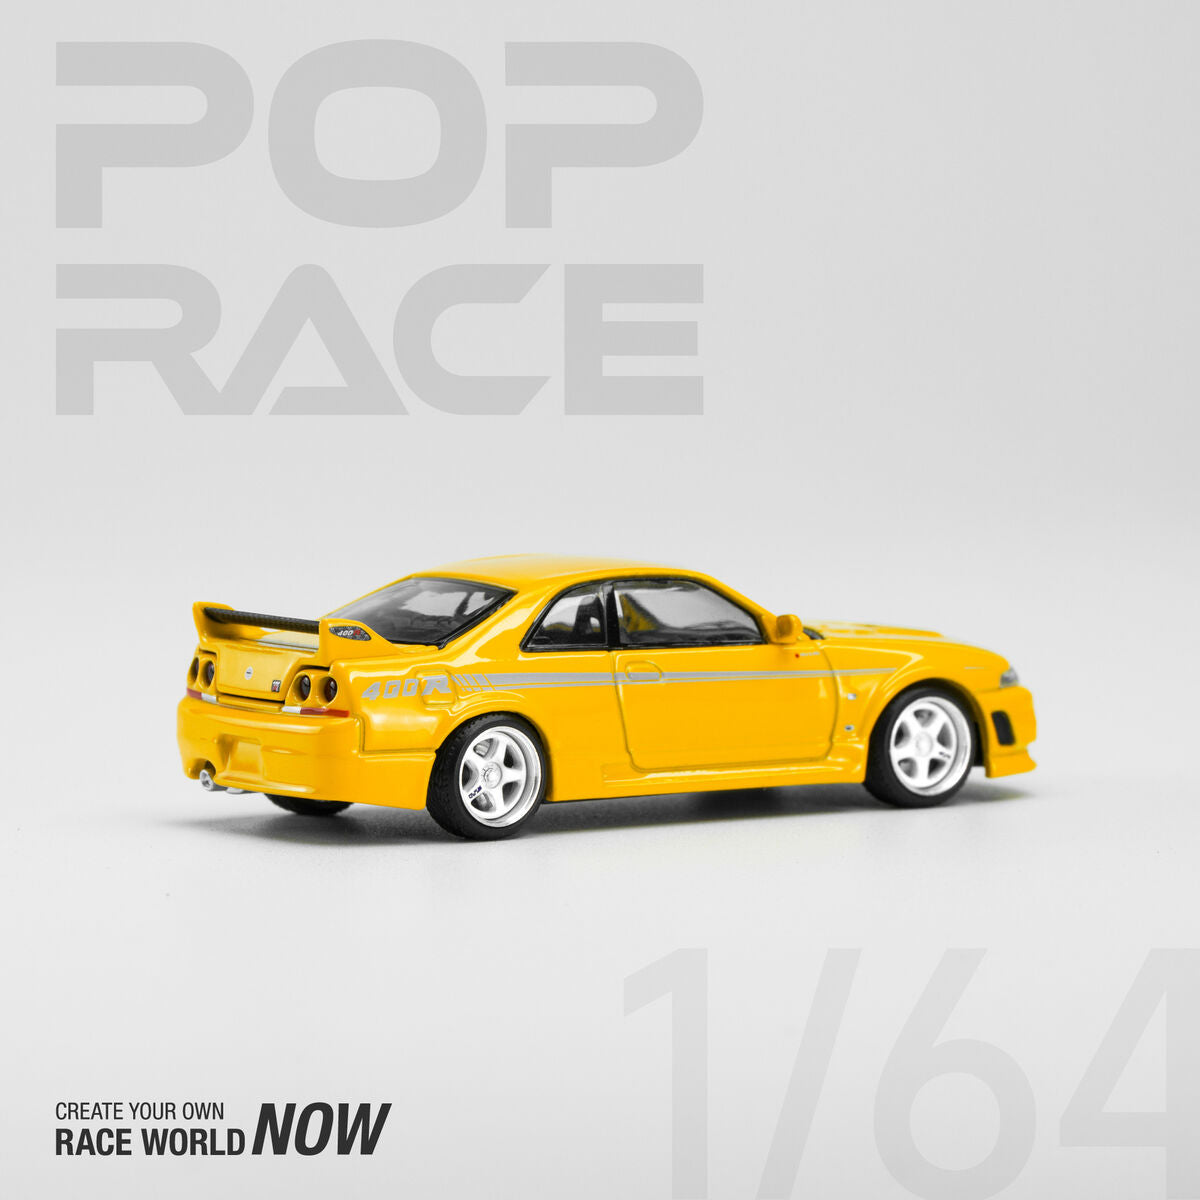 Pop Race 1:64 Nissan GT-R R33 Nismo 400R - Prototype Yellow